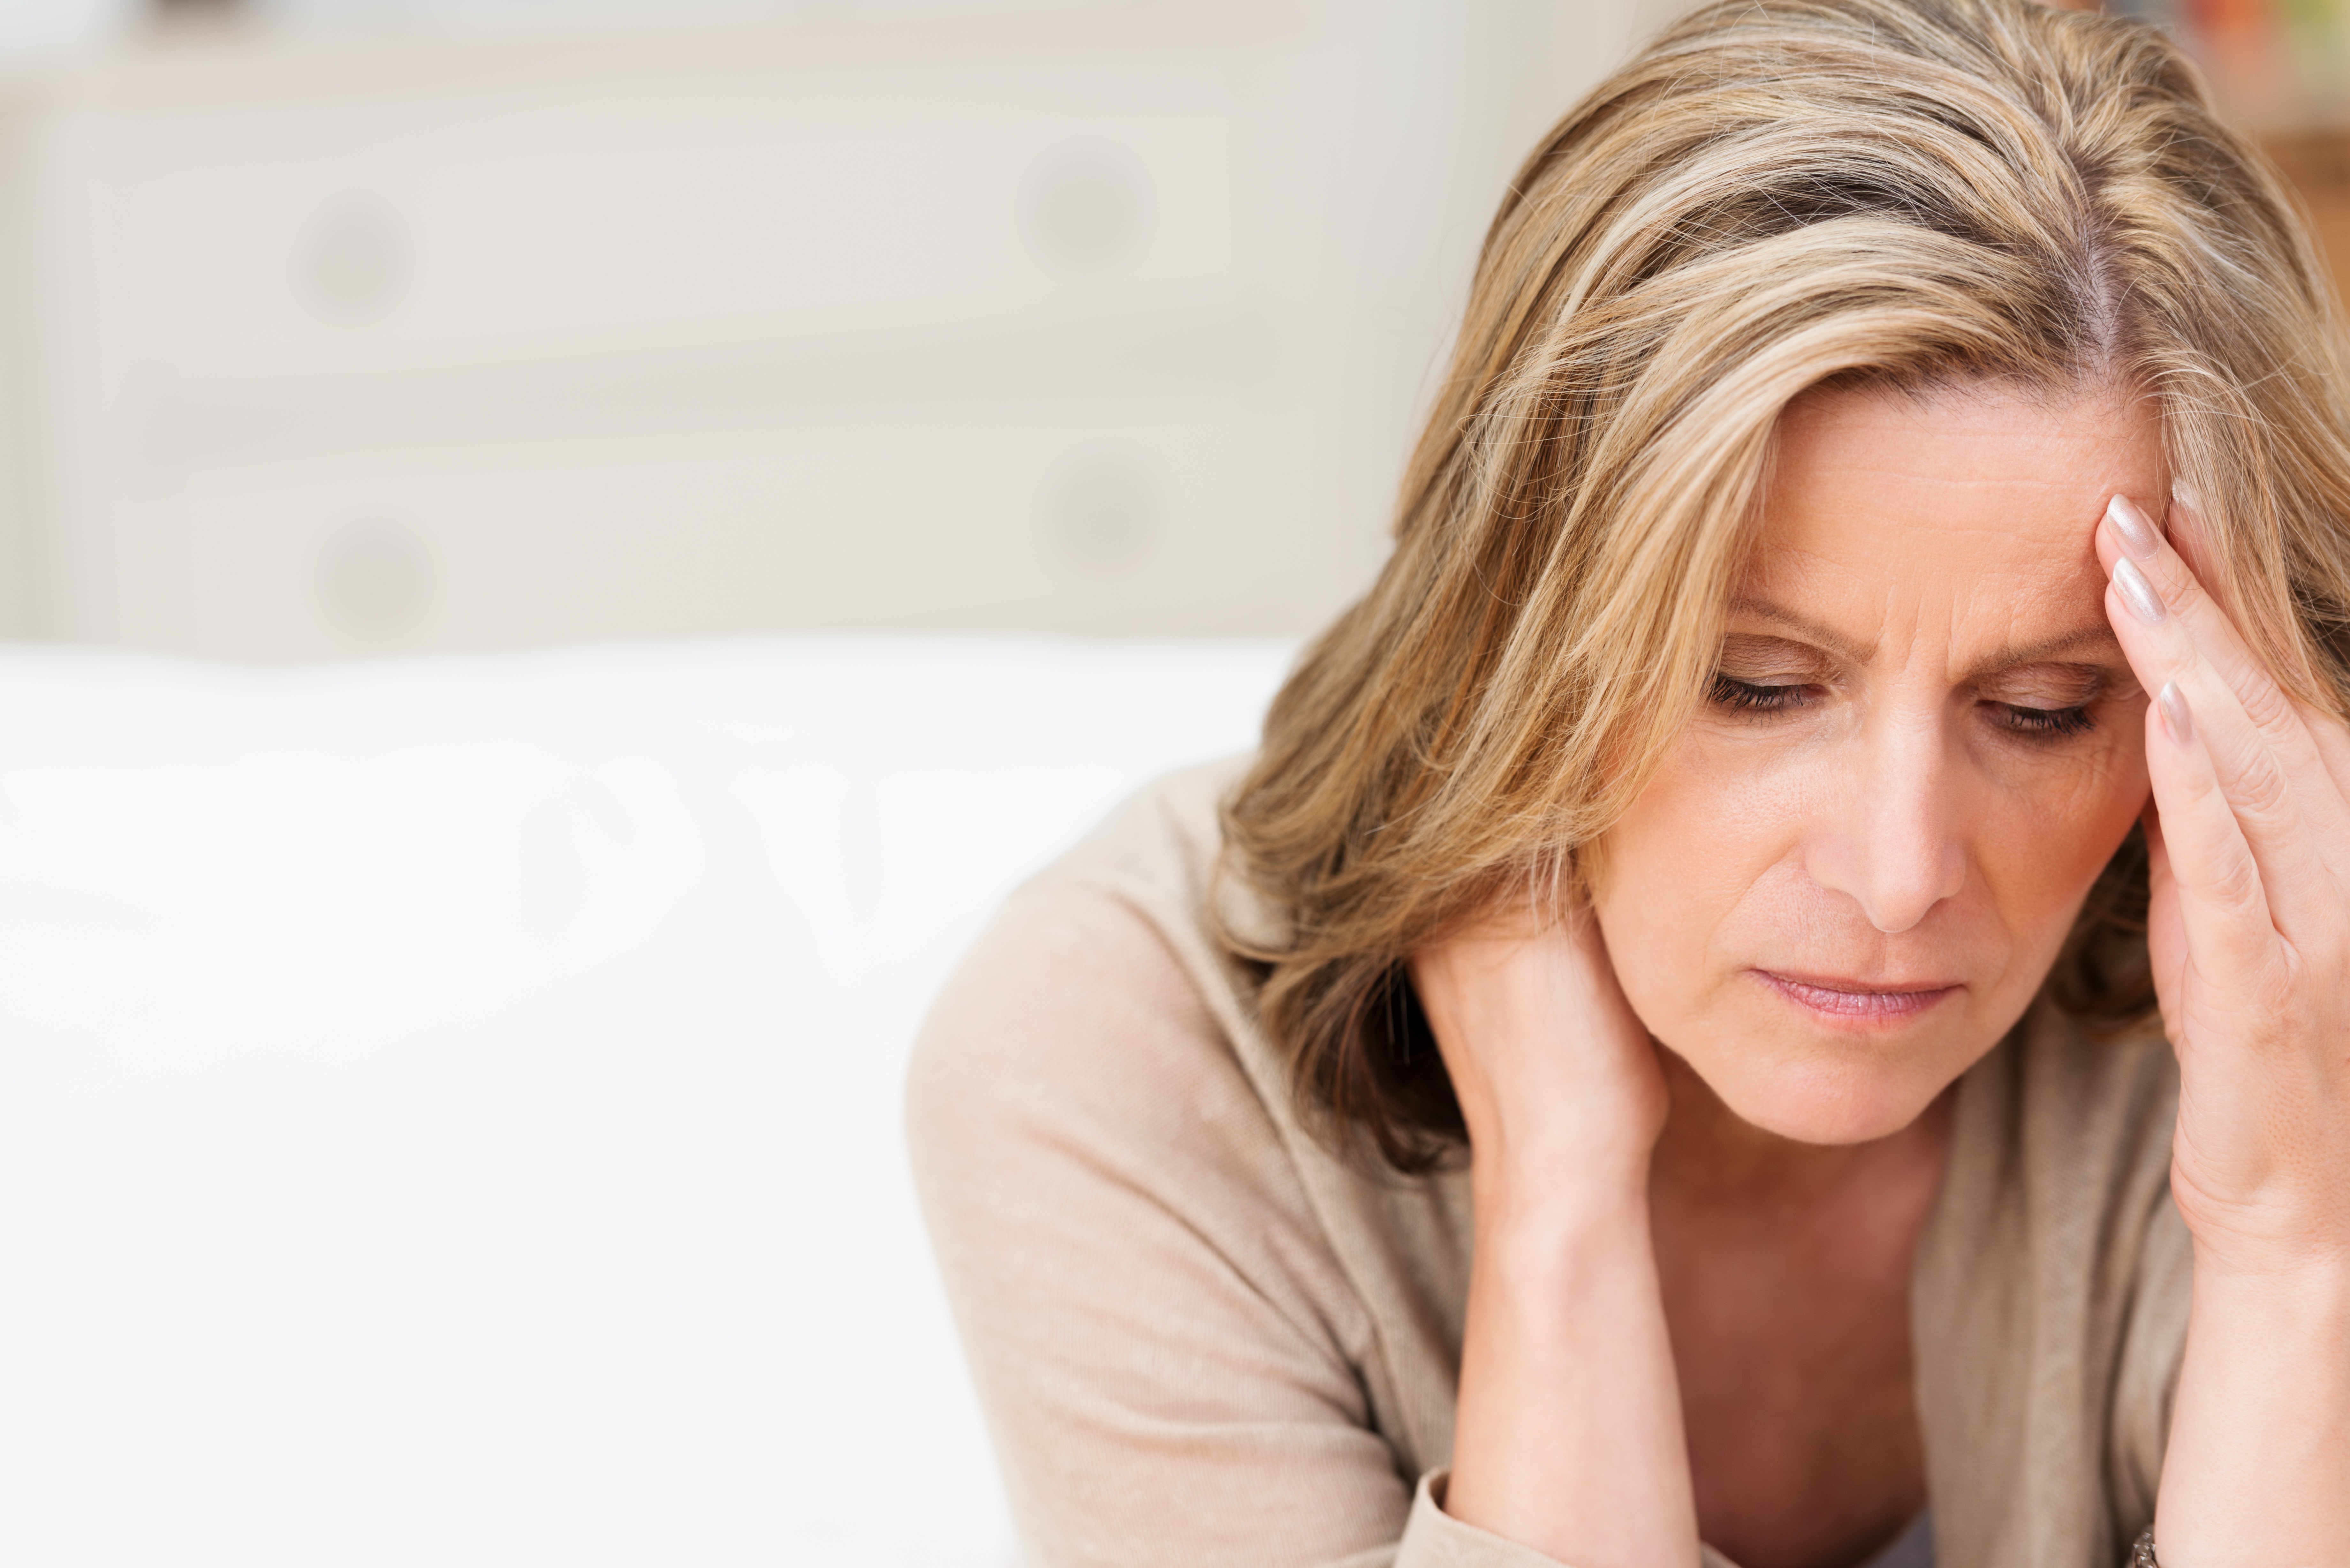 Fibromyalgia Symptoms May Mimic High Disease Activity in Patients With Rheumatoid Arthritis